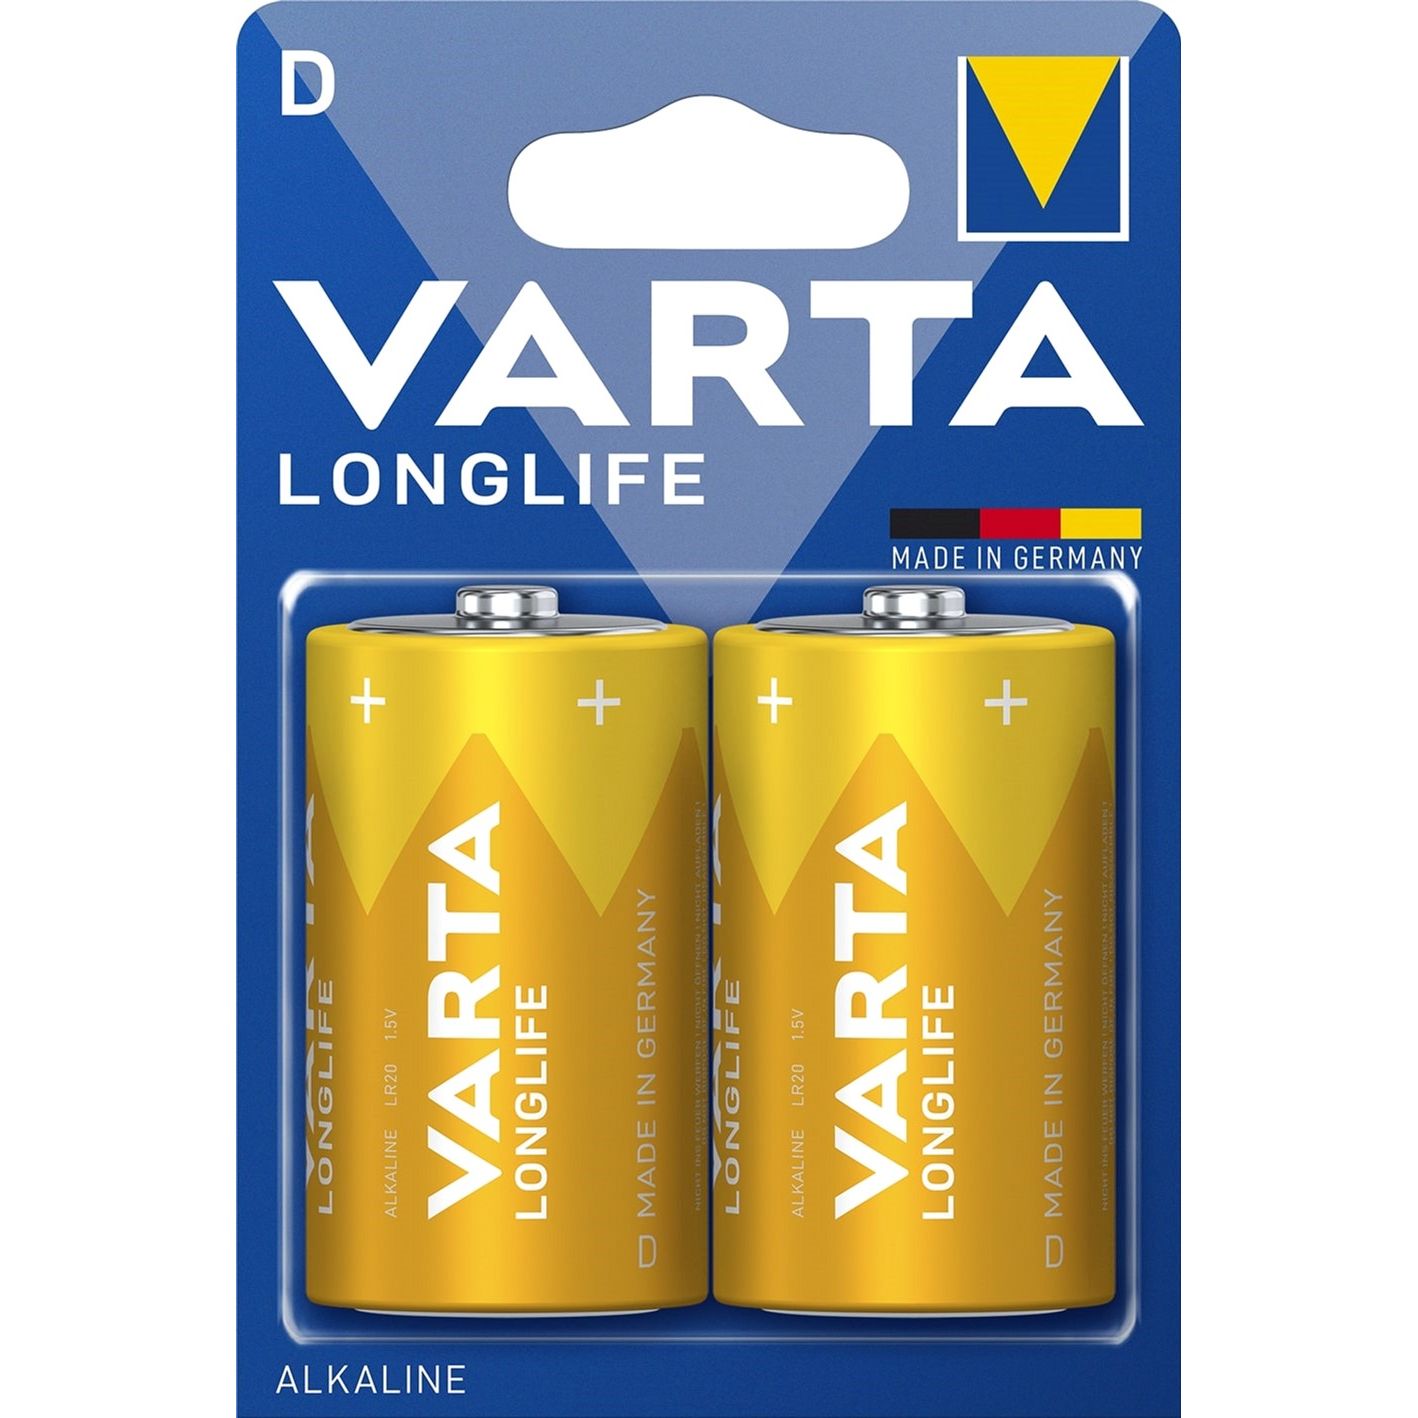 Батарейки Varta Longlife D Bli Alkaline, 2 шт. - фото 1